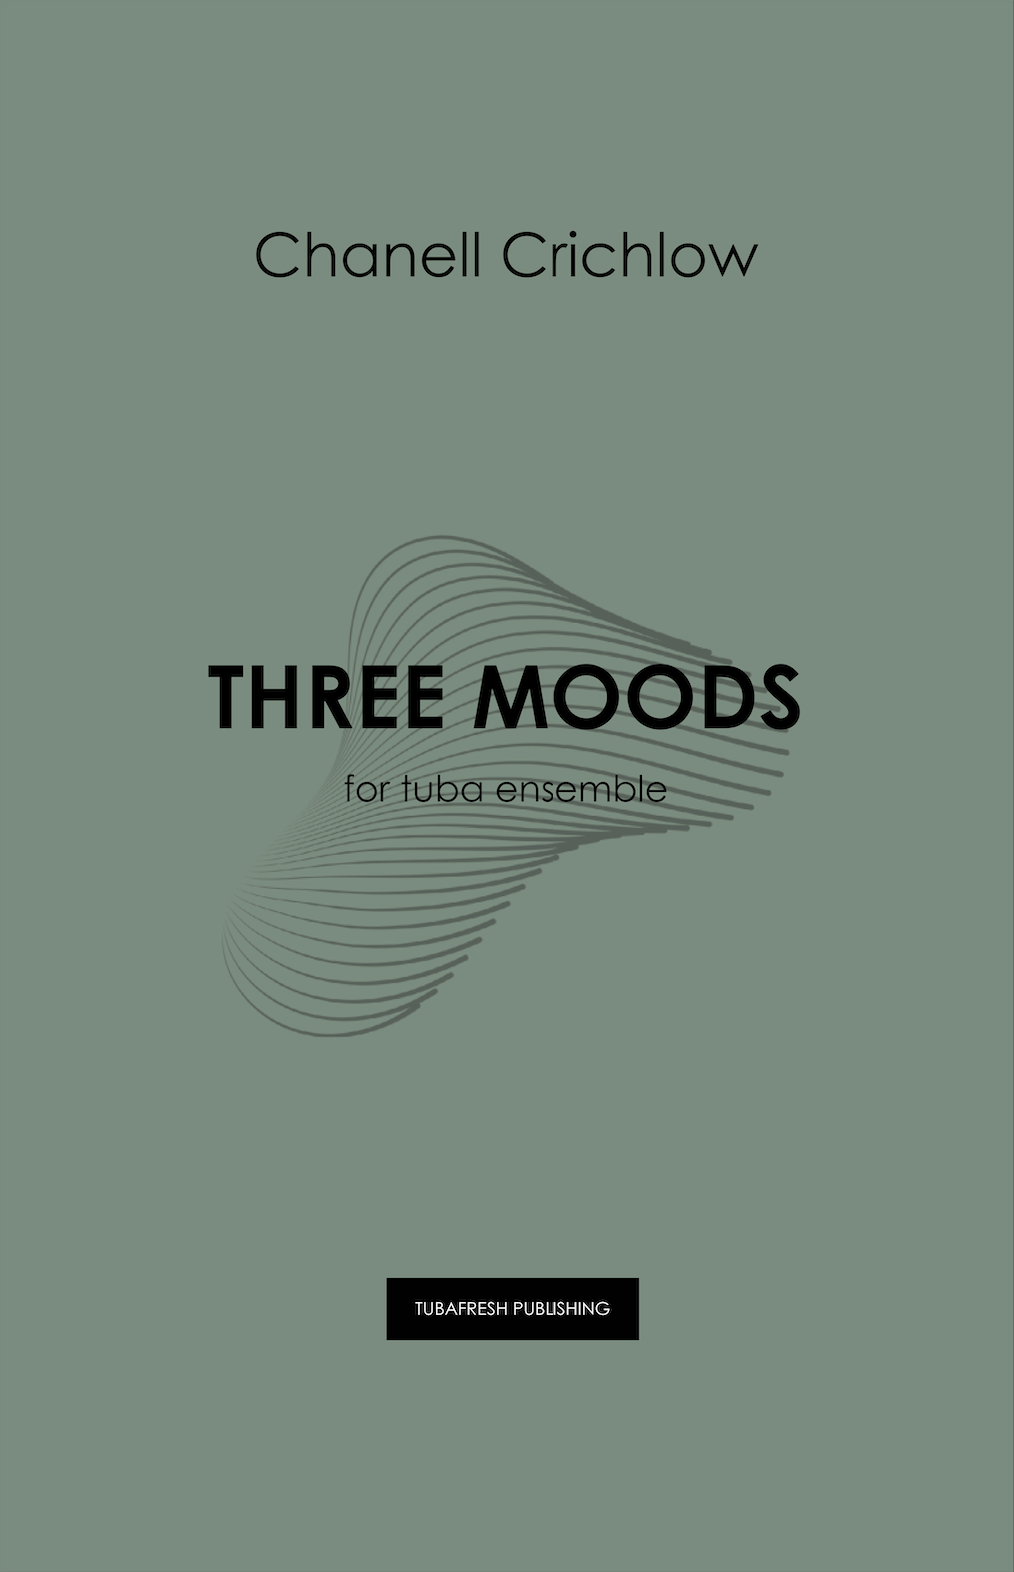 Three Moods (Tuba Ensemble Version) by Chanell Crichlow